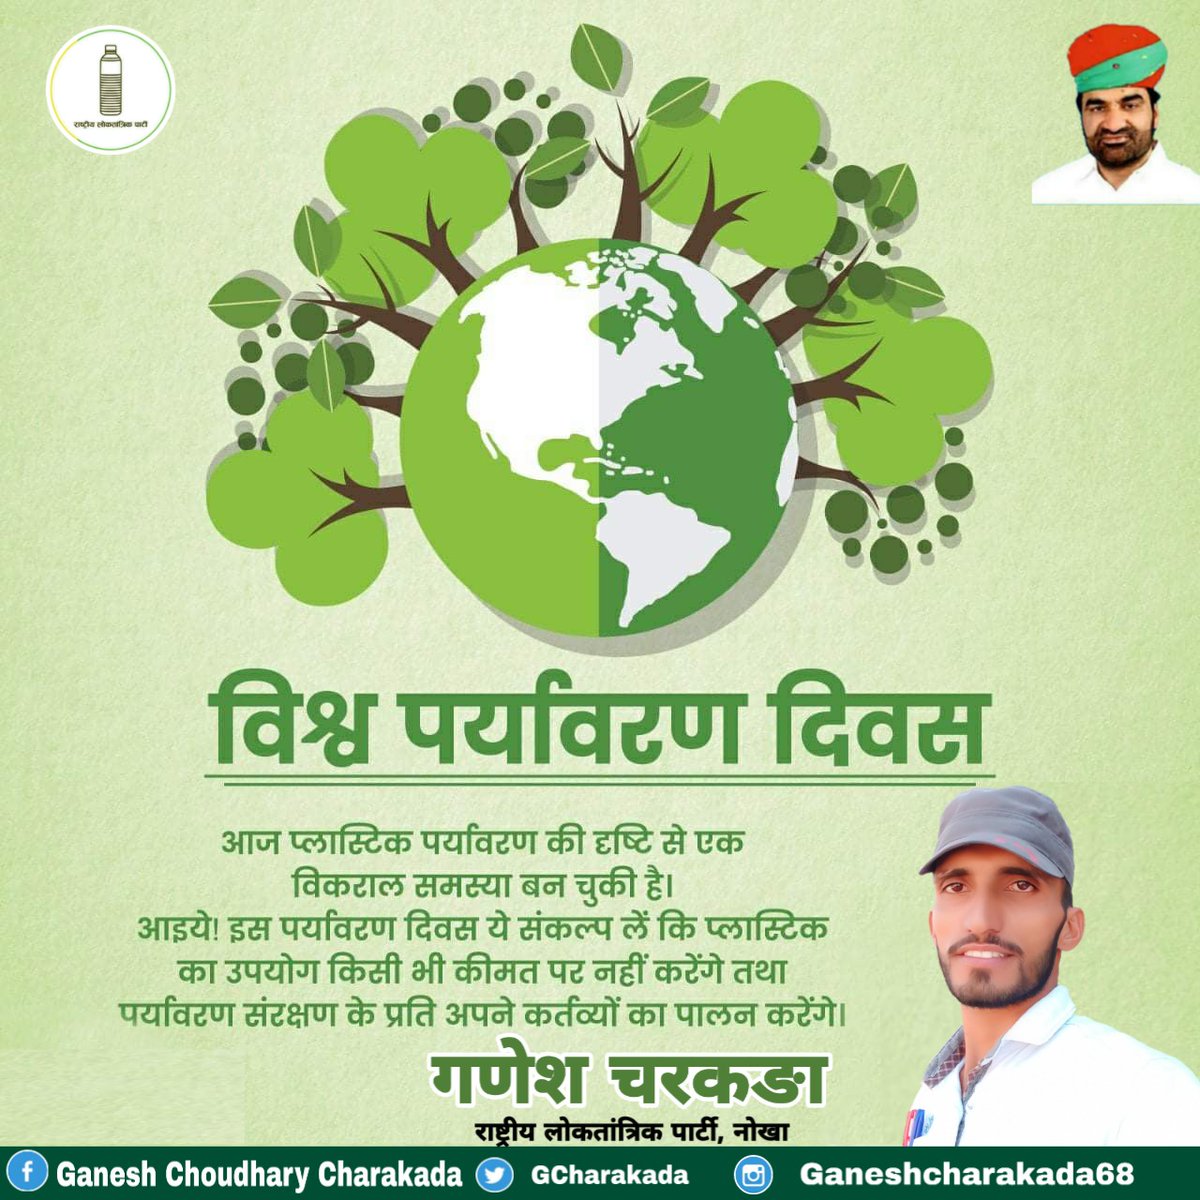 विश्व पर्यावरण दिवस की हार्दिक बधाई एवं शुभकामनाएँ। 
@hanumanbeniwal @RLPINDIAorg @SunnyJatRLP @Spurdha6 @girdharlegha2 @RAMLALSiyag7 @DanaramGhintala @mahijatactor @Vijay_Beniwal